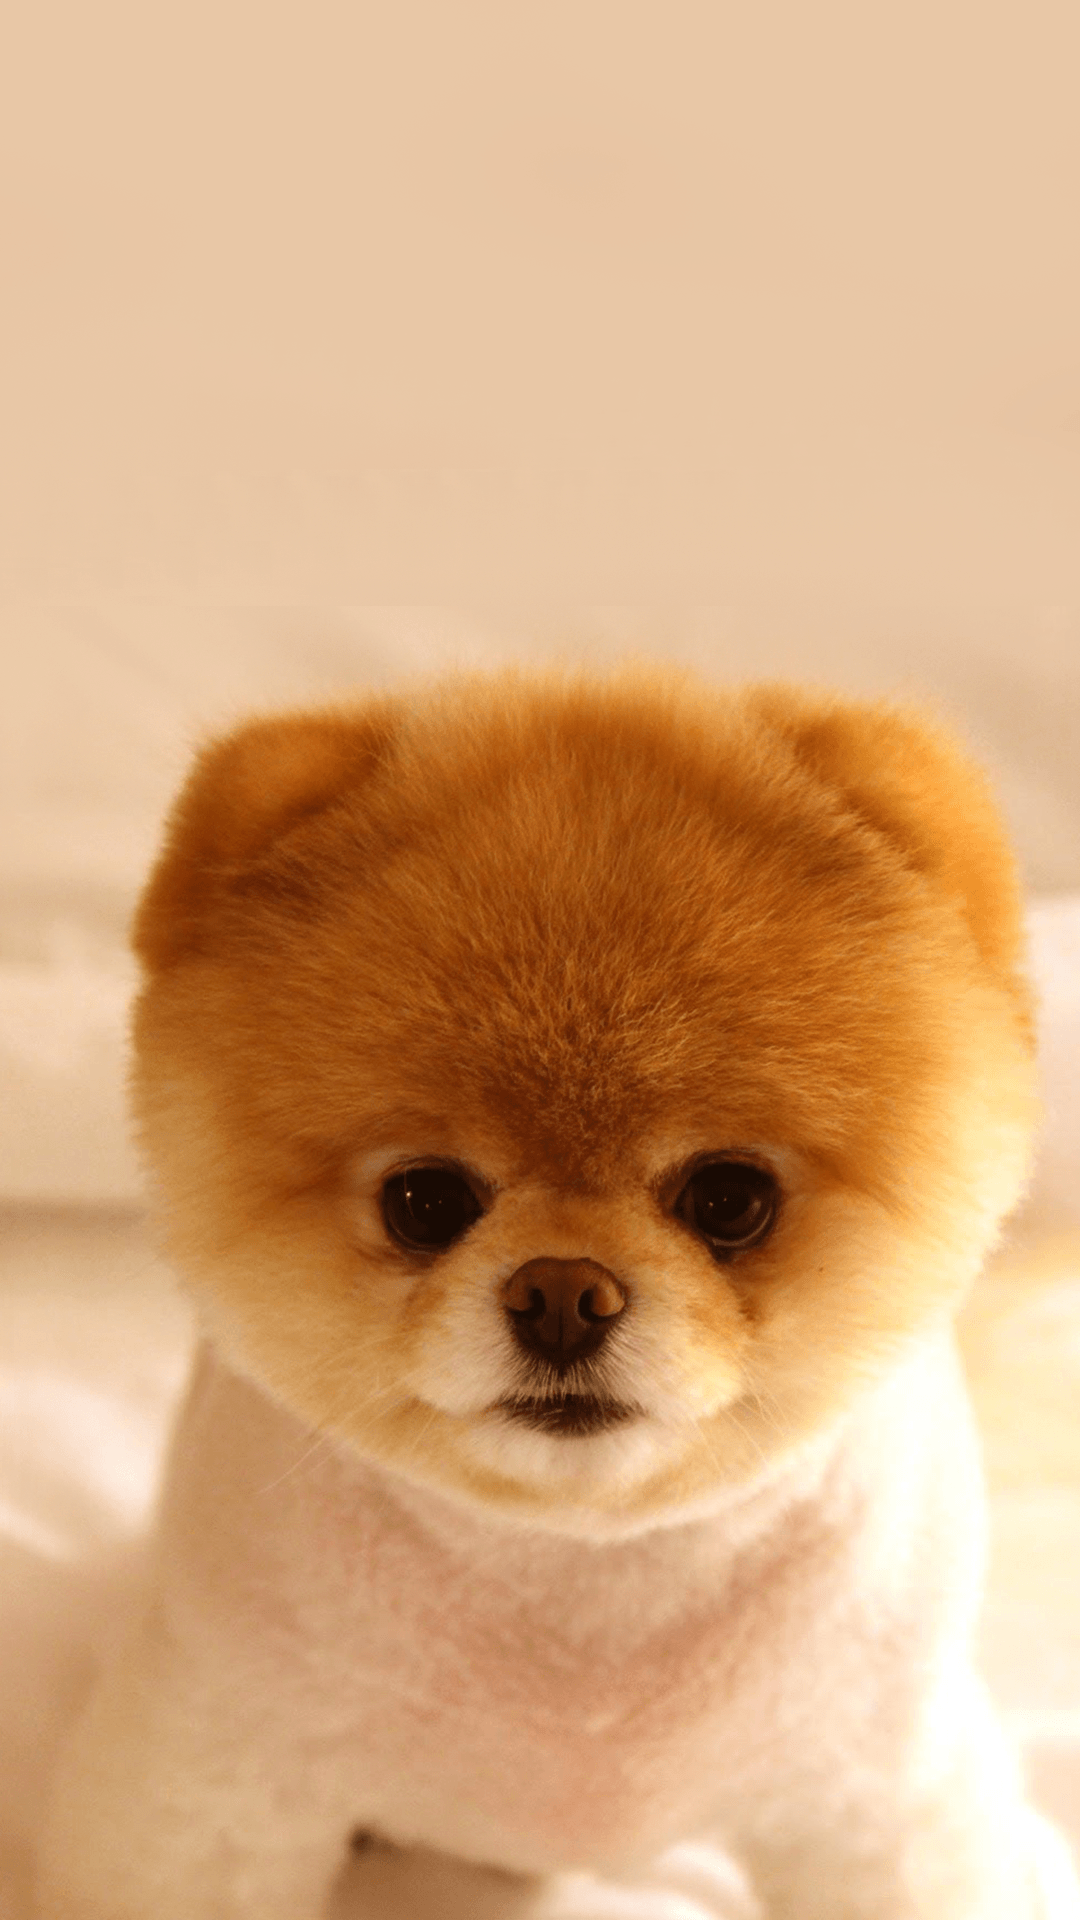 Cute Puppy iPhone Wallpaper Top